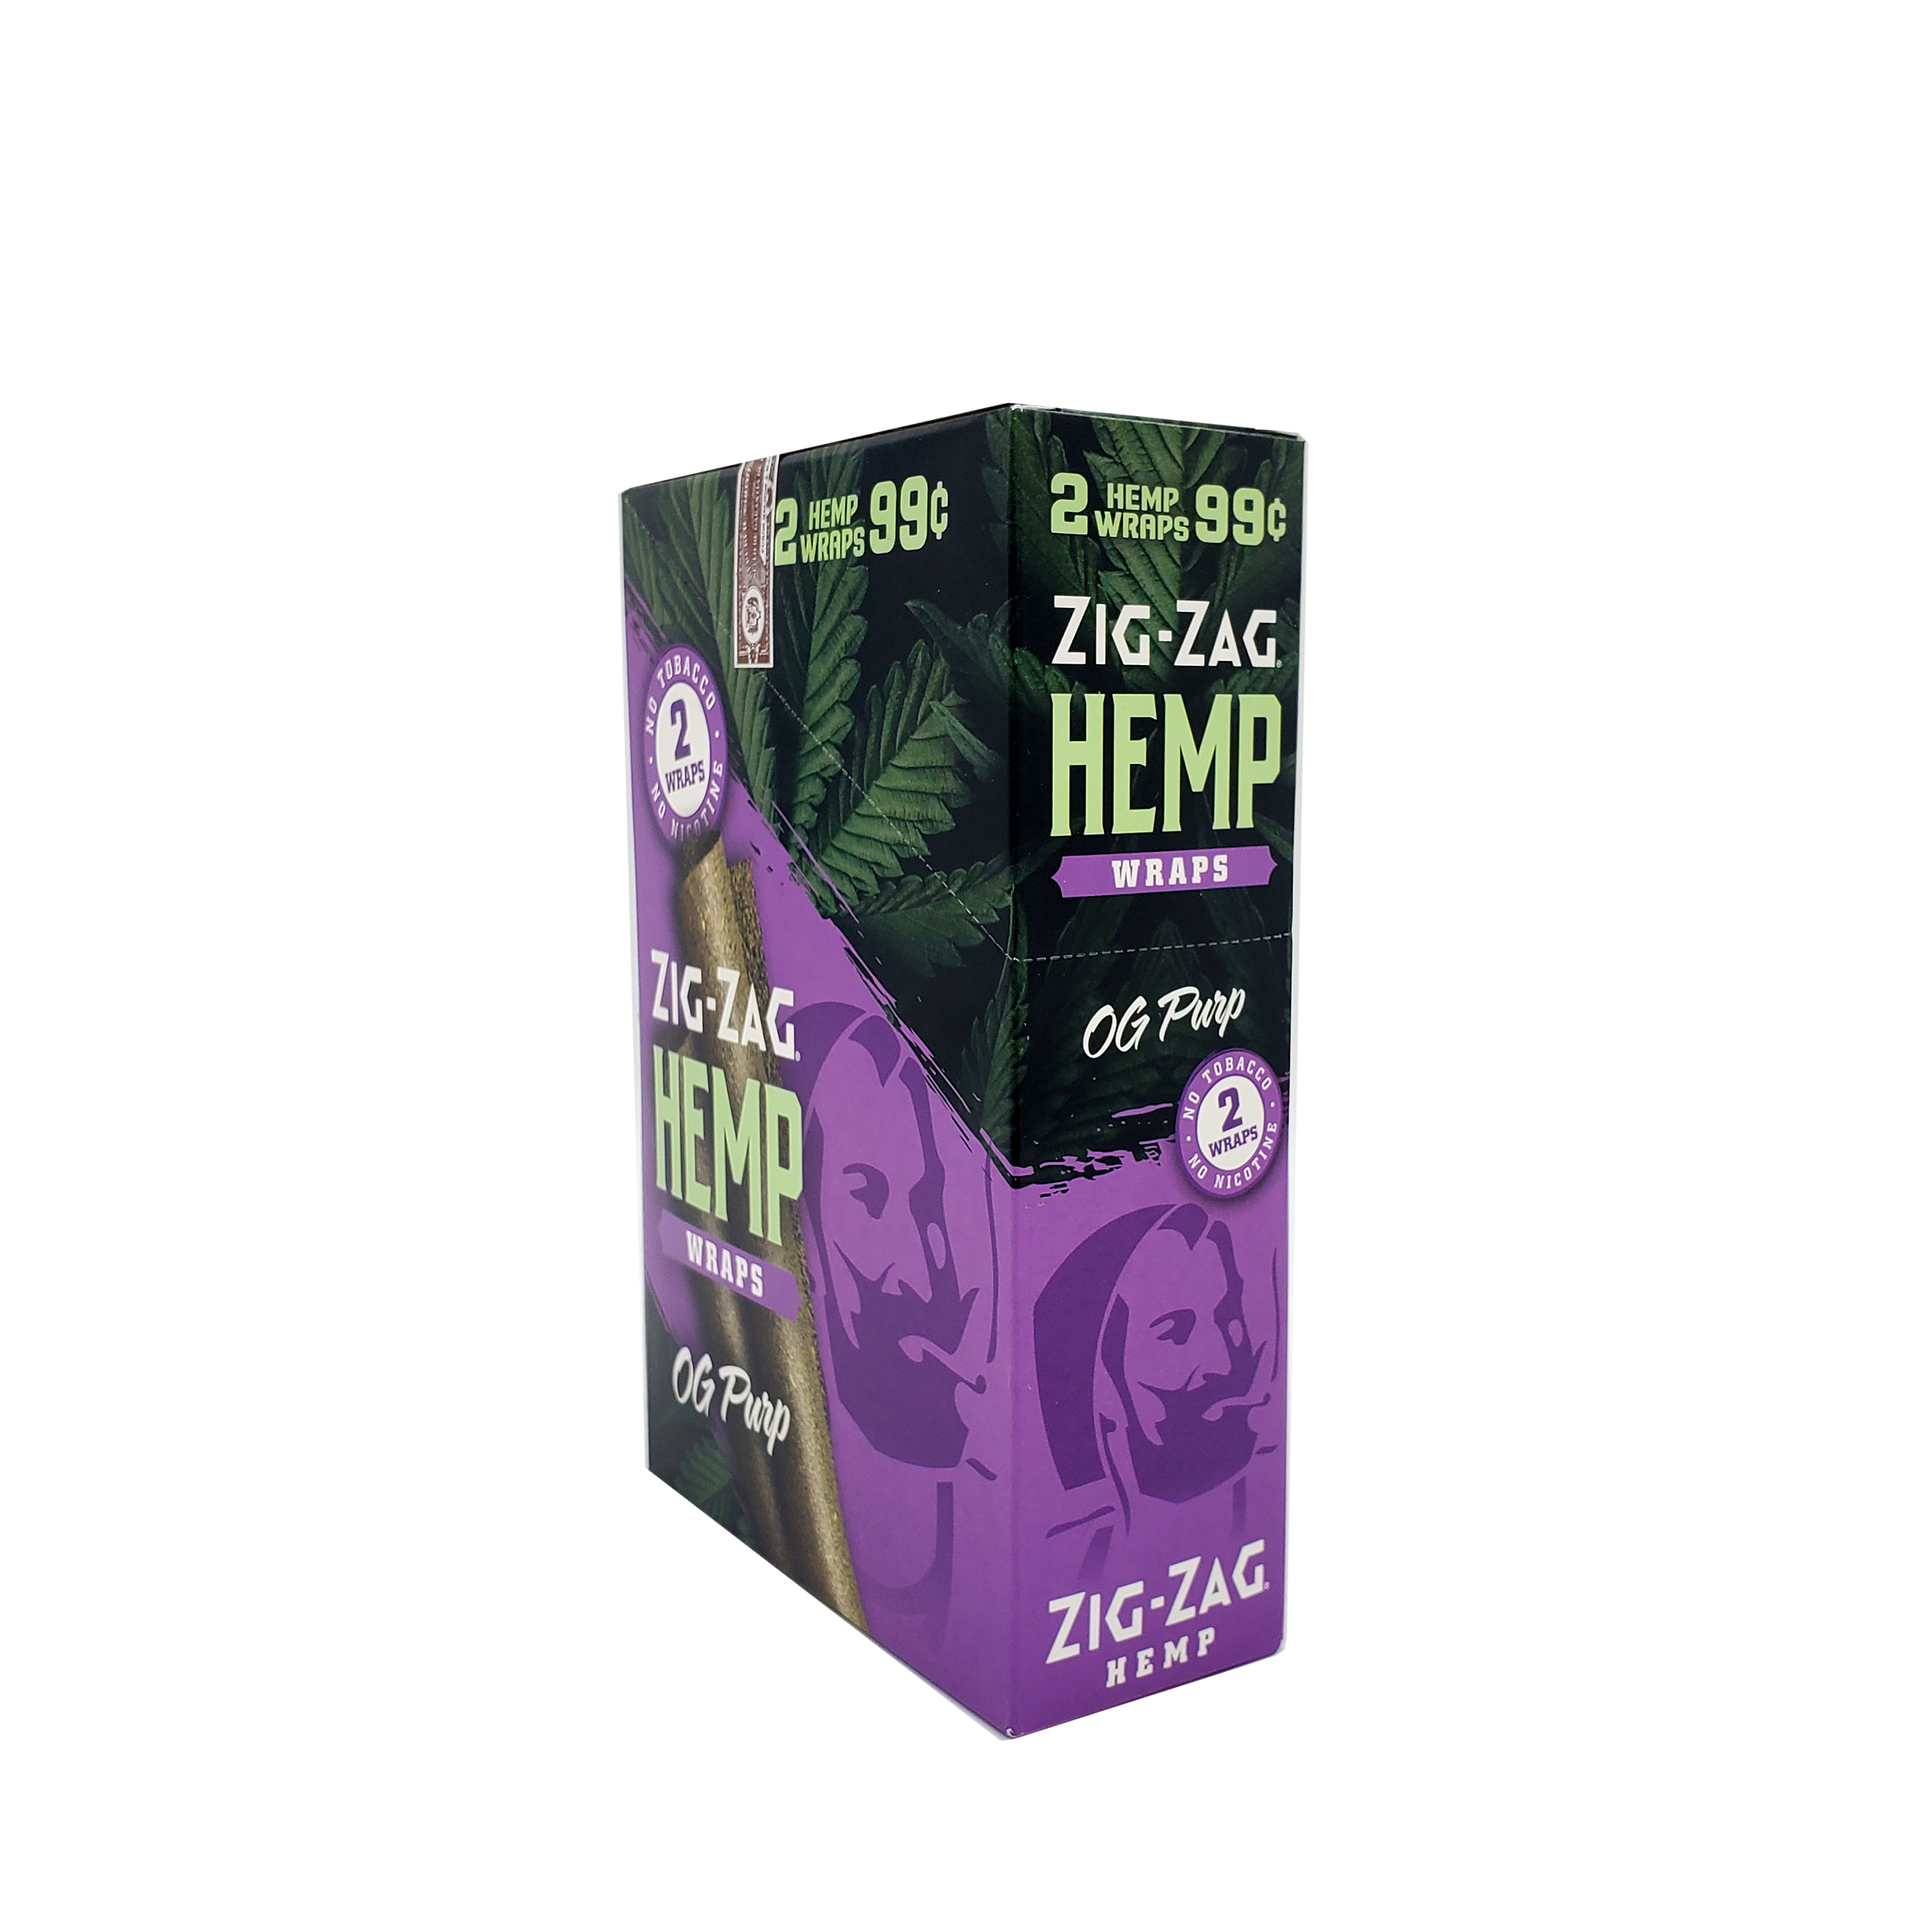 Karma Hemp Wraps Purple Chill 25 Pack 